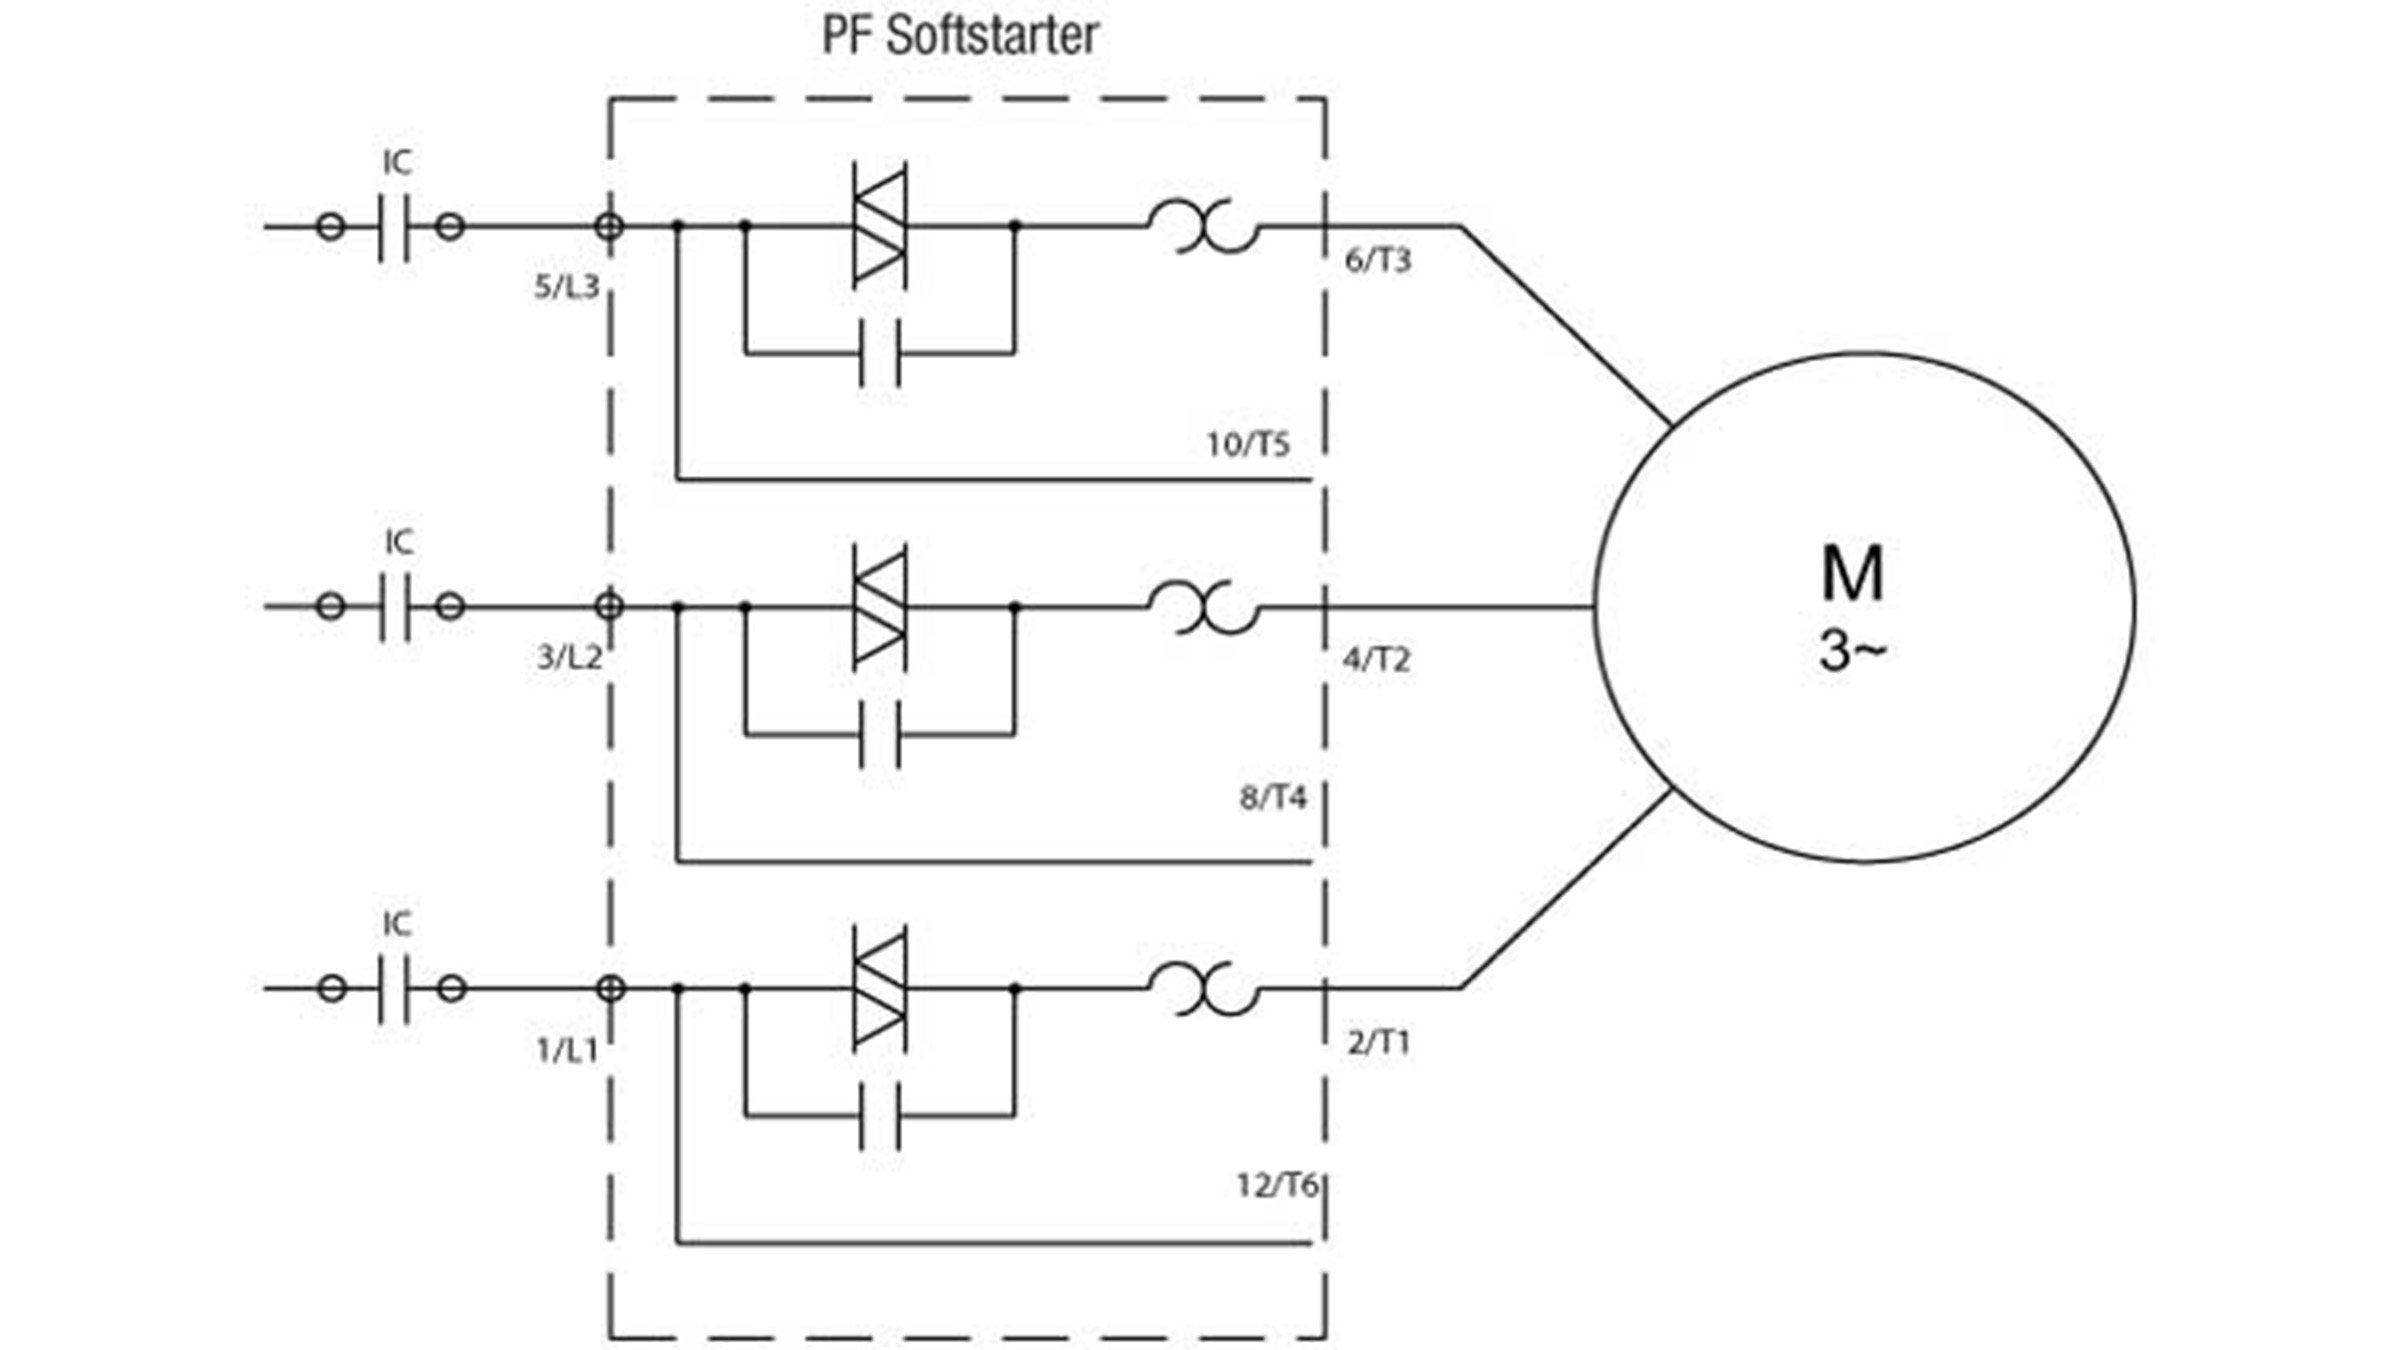 Sprecher & Schuh Series PFS Softstarter line connected wiring diagram